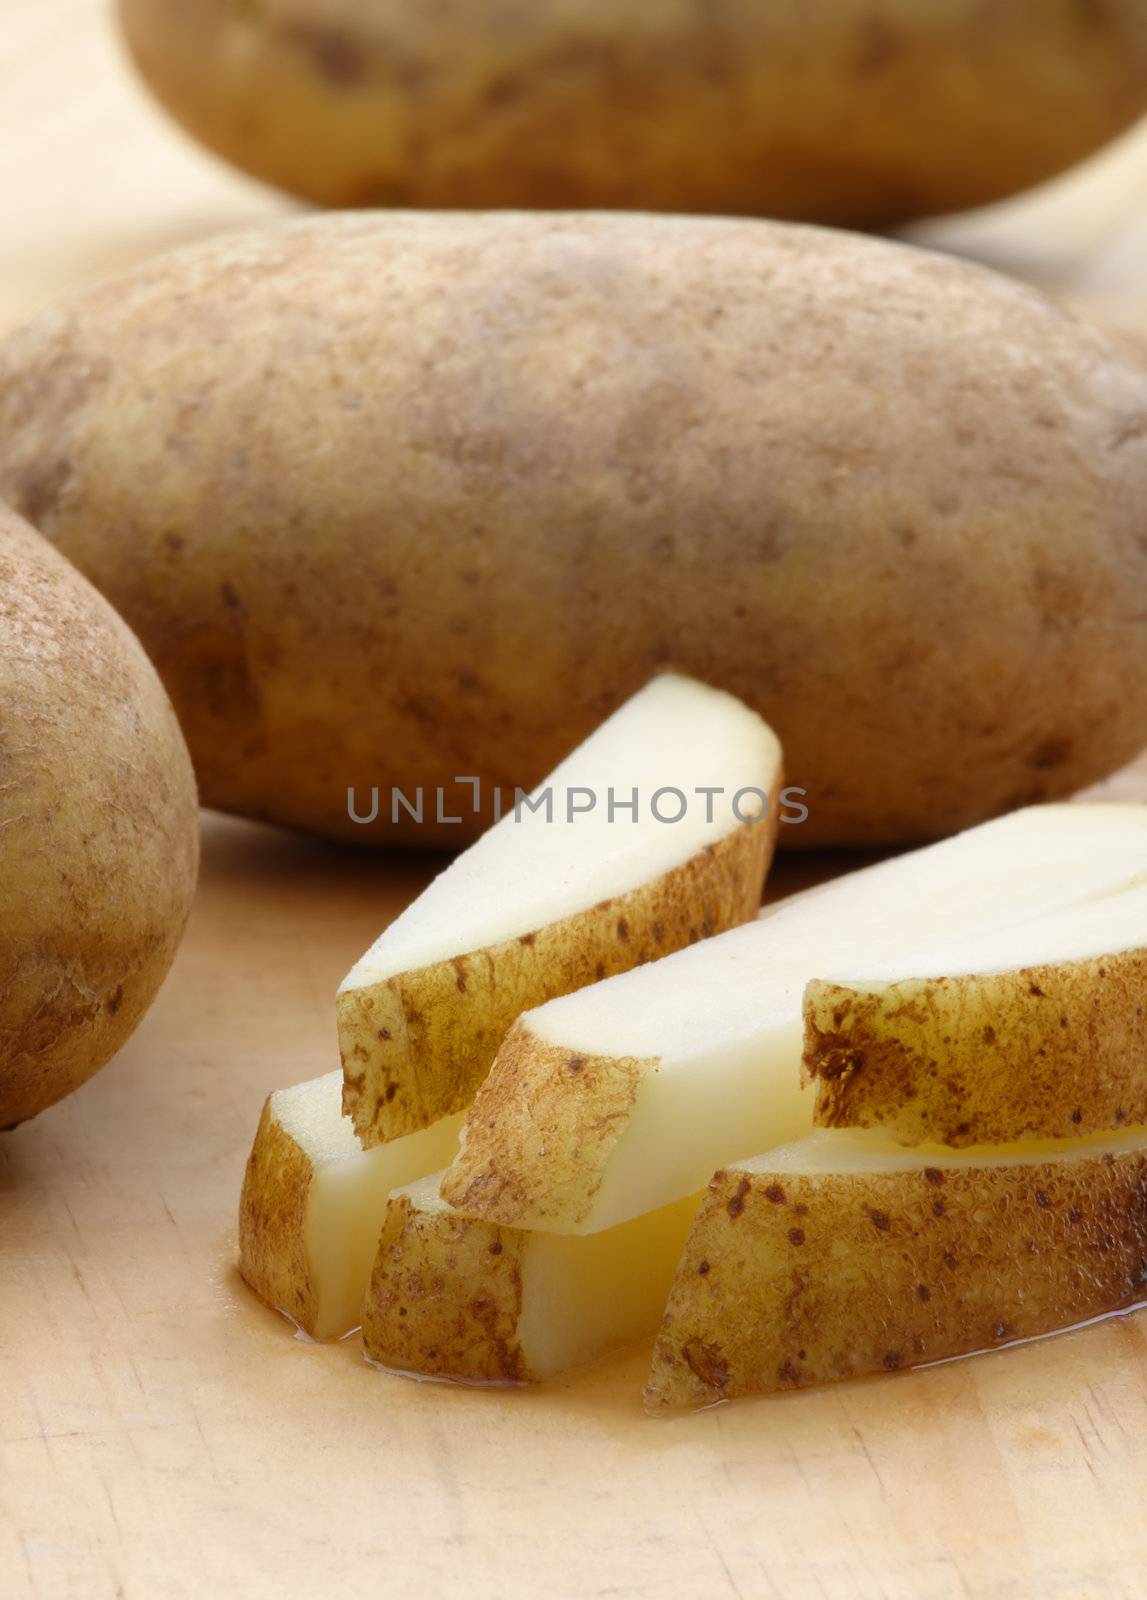 Fresh cut potatoes on a wooden cutting board.